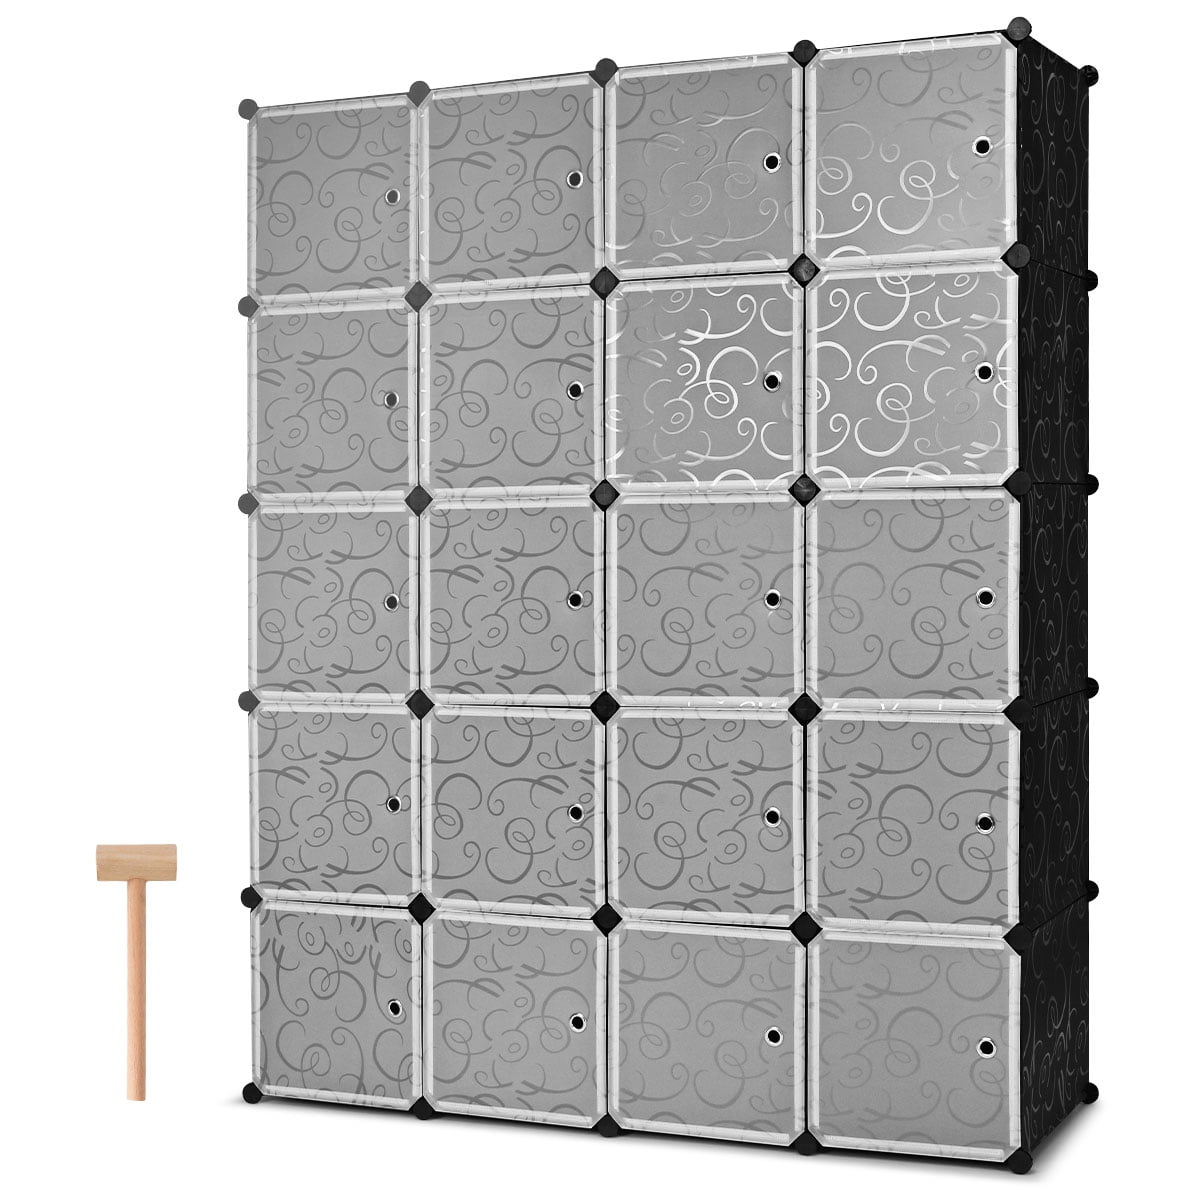 Details about   12 Cube DIY Portable Closet Storage Organizer Clothes Wardrobe Cabinet W/ Doors 